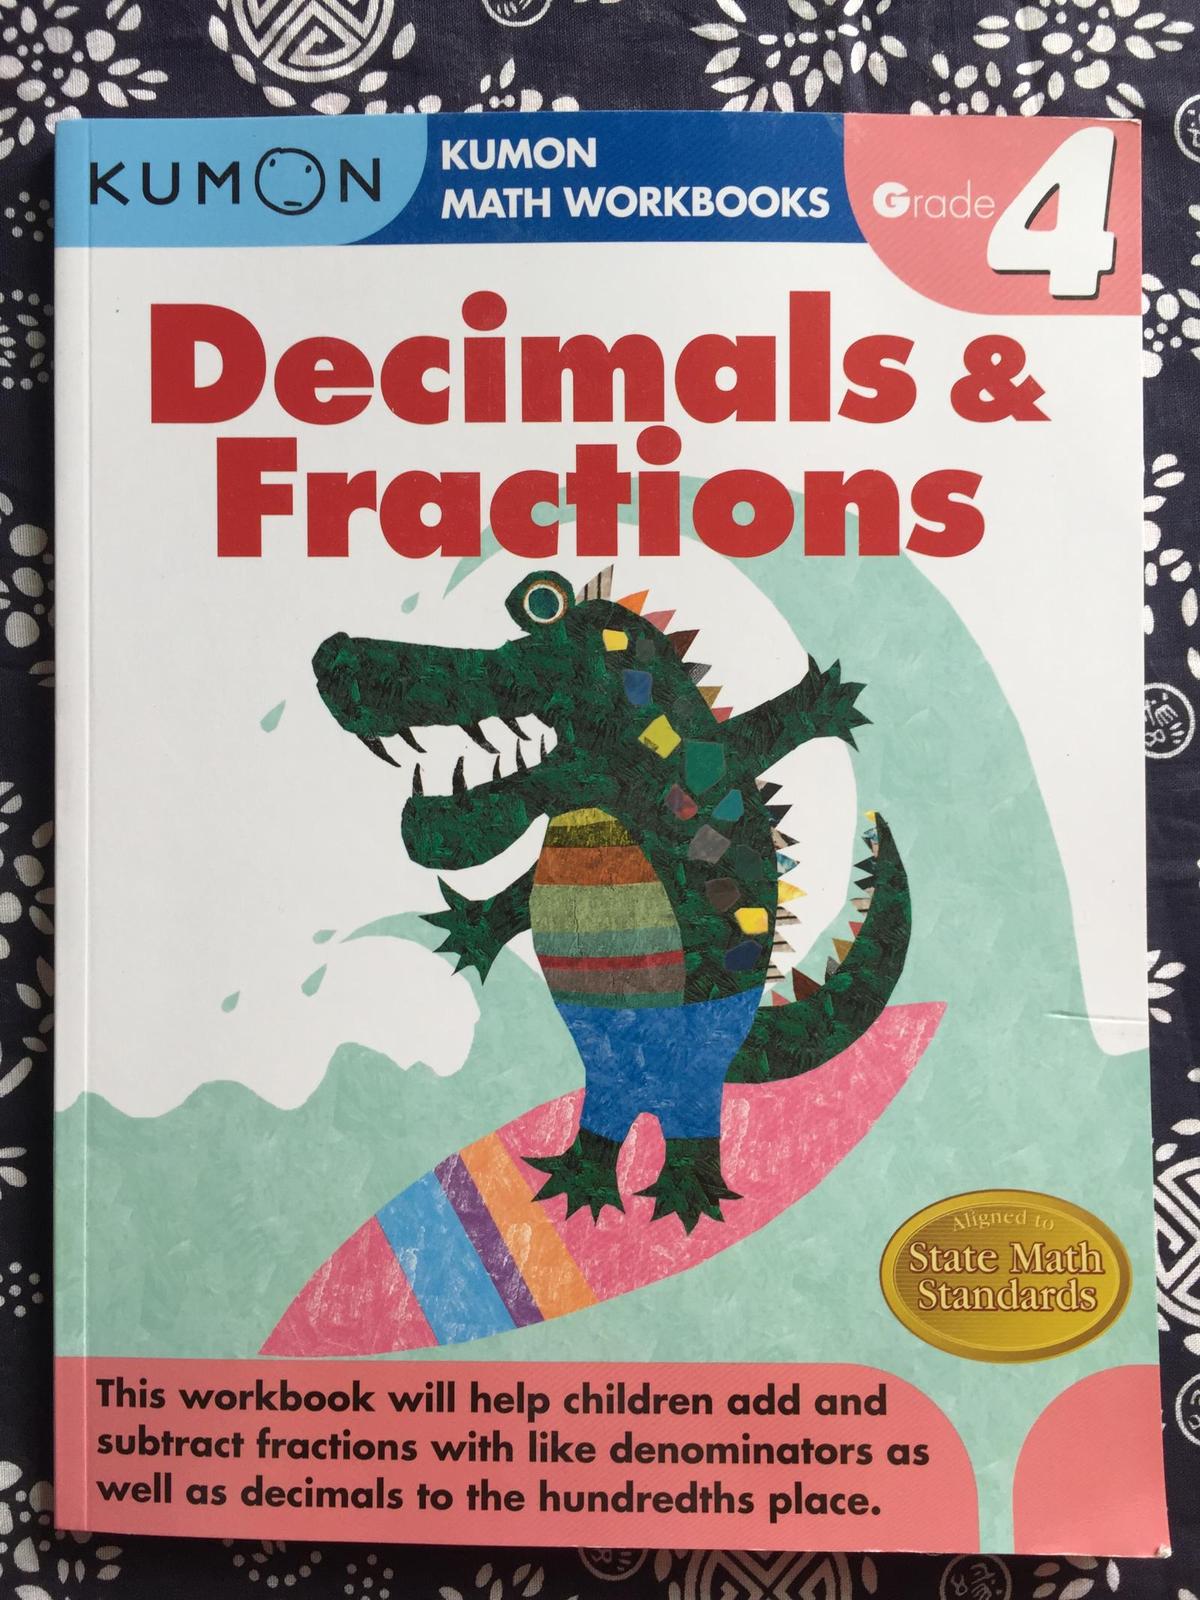 Kumon Math Workbooks• Decimals & Fractions• Grade 4